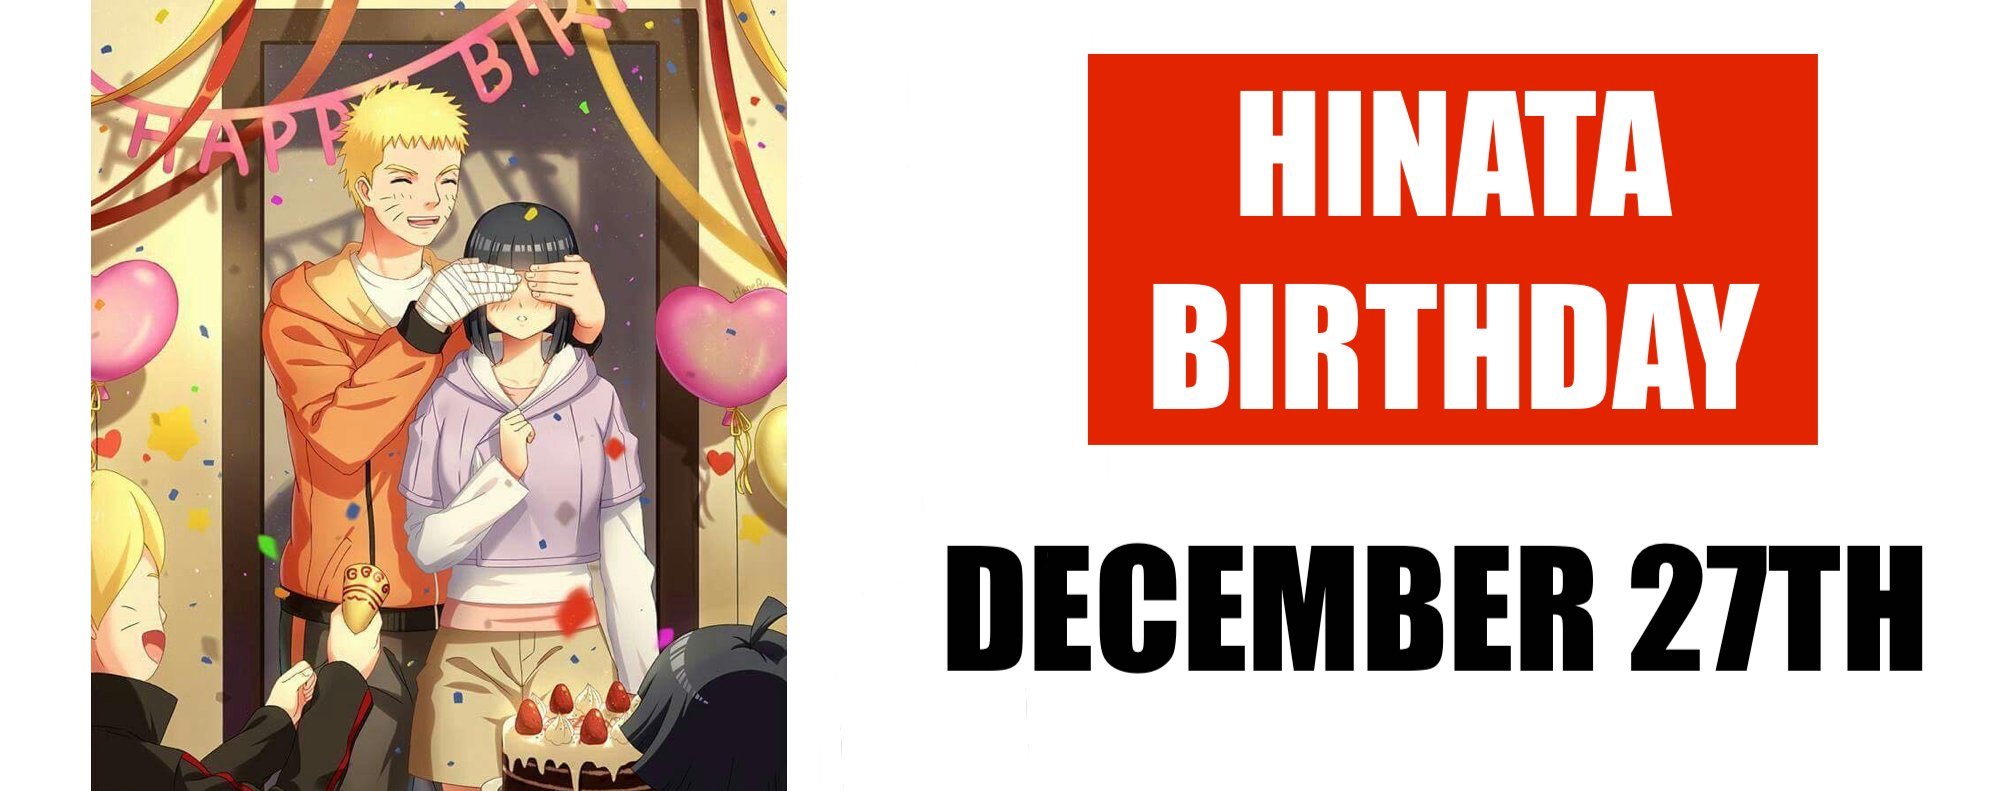 When is Hinata's Birthday